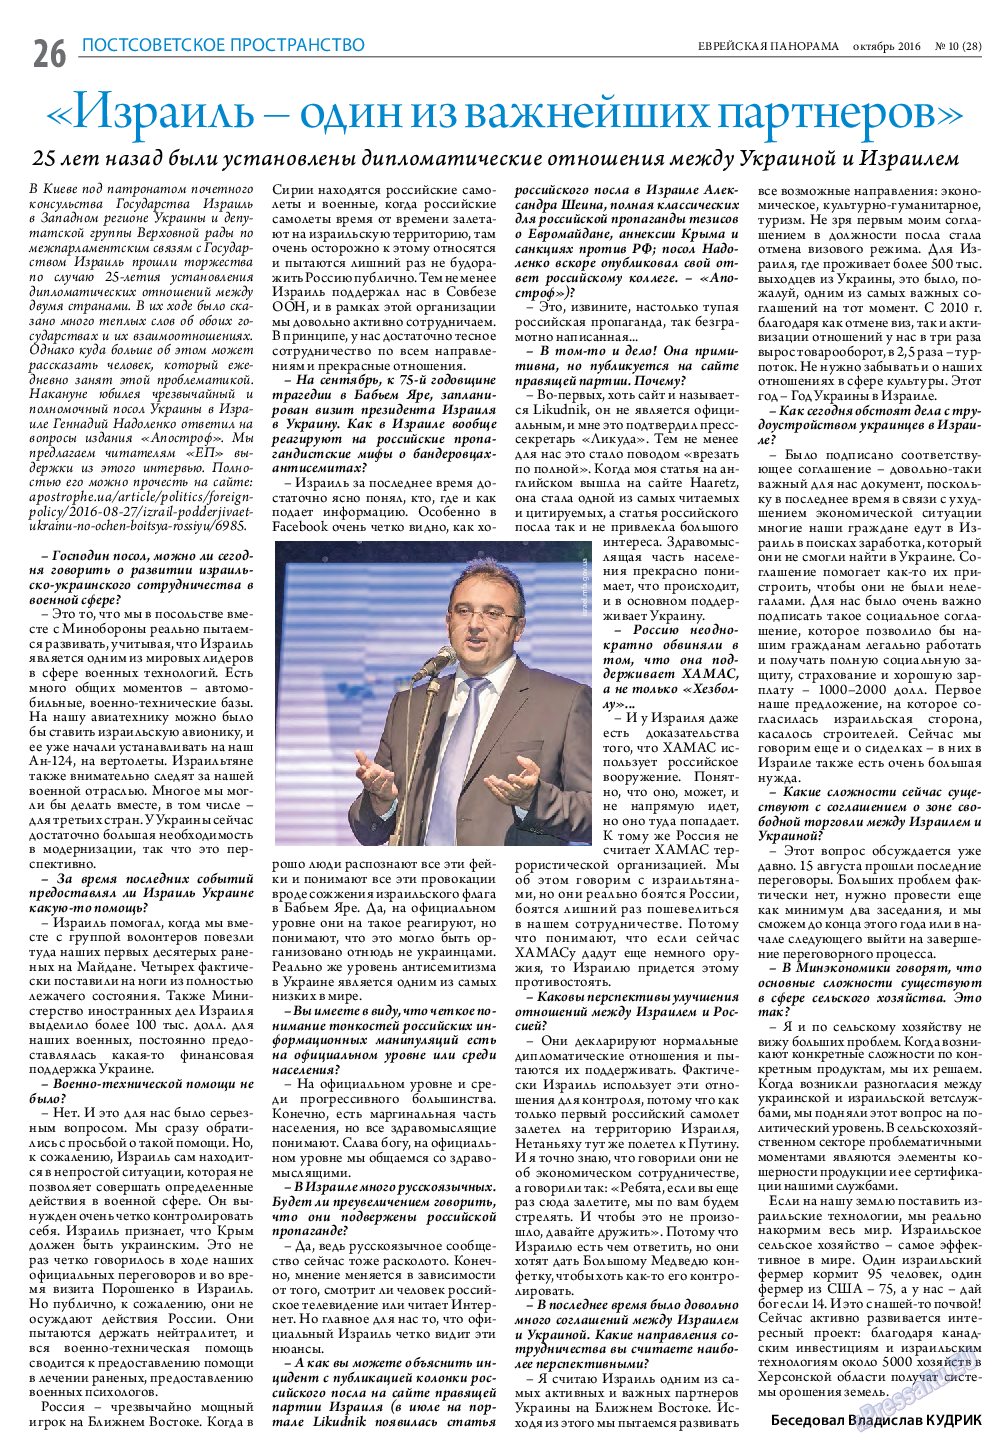 Еврейская панорама, газета. 2016 №10 стр.26